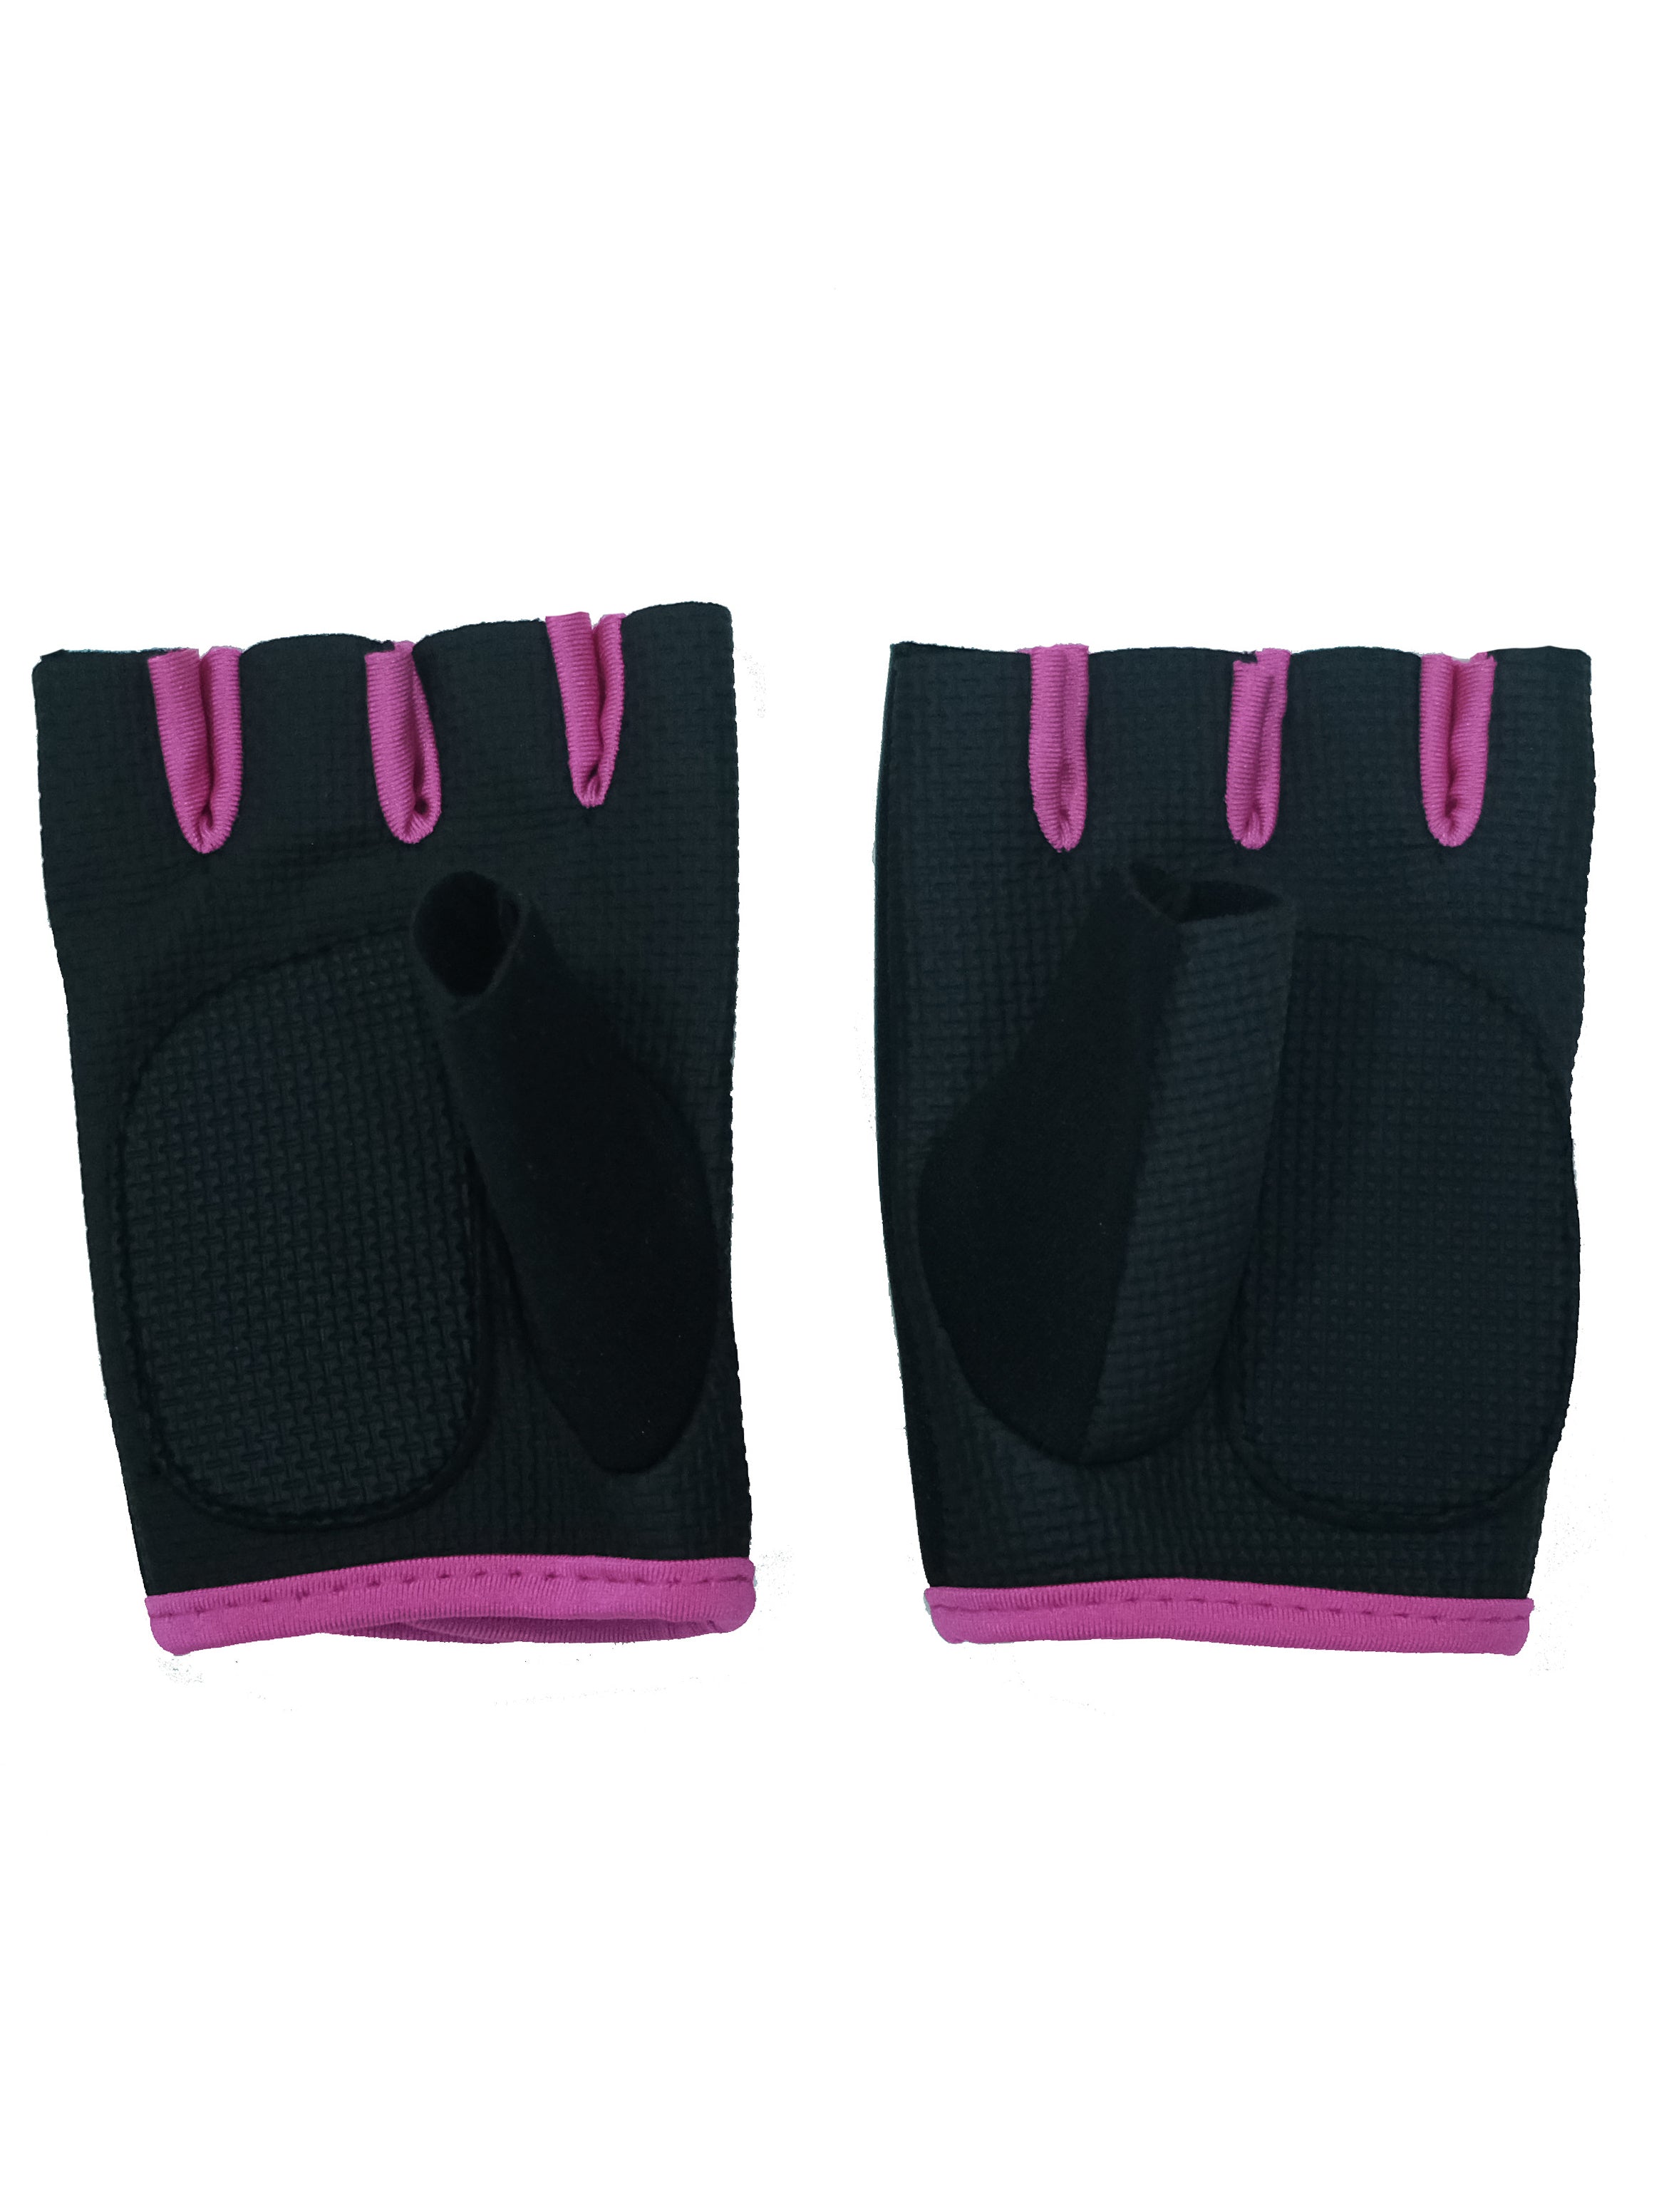 Gym Gloves ver. 2 - Pink